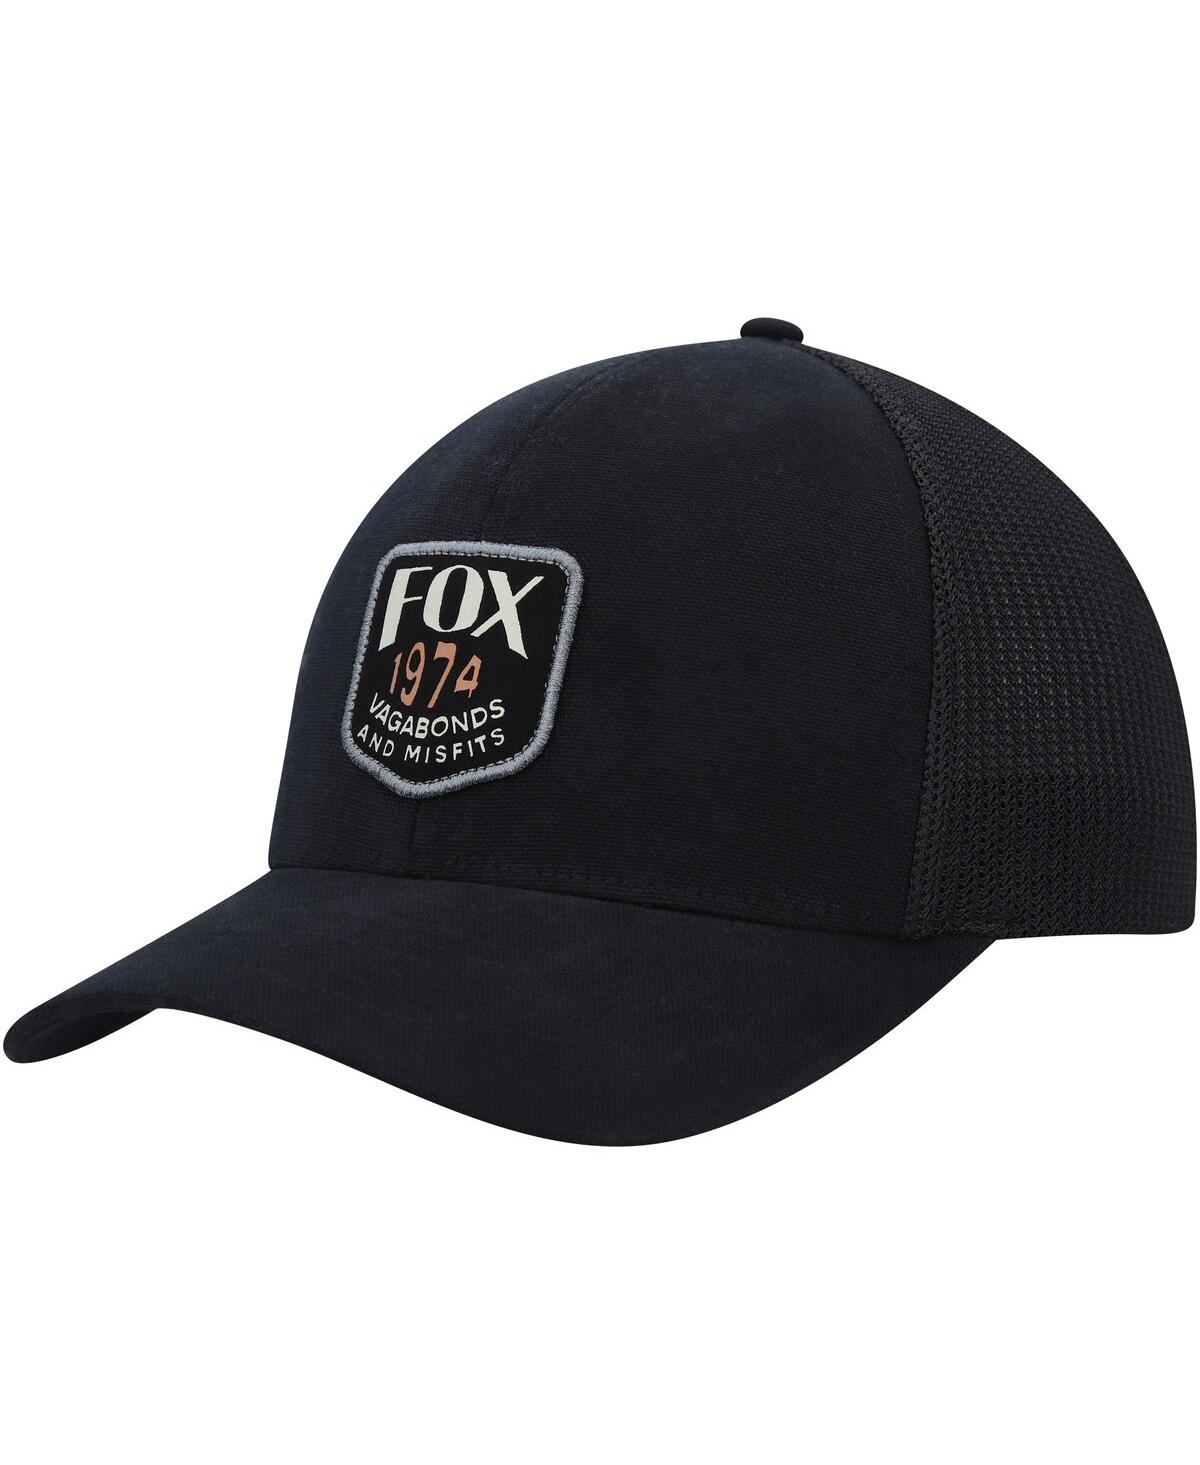 Men's Fox Black Predominant Mesh Flexfit Flex Hat - Black